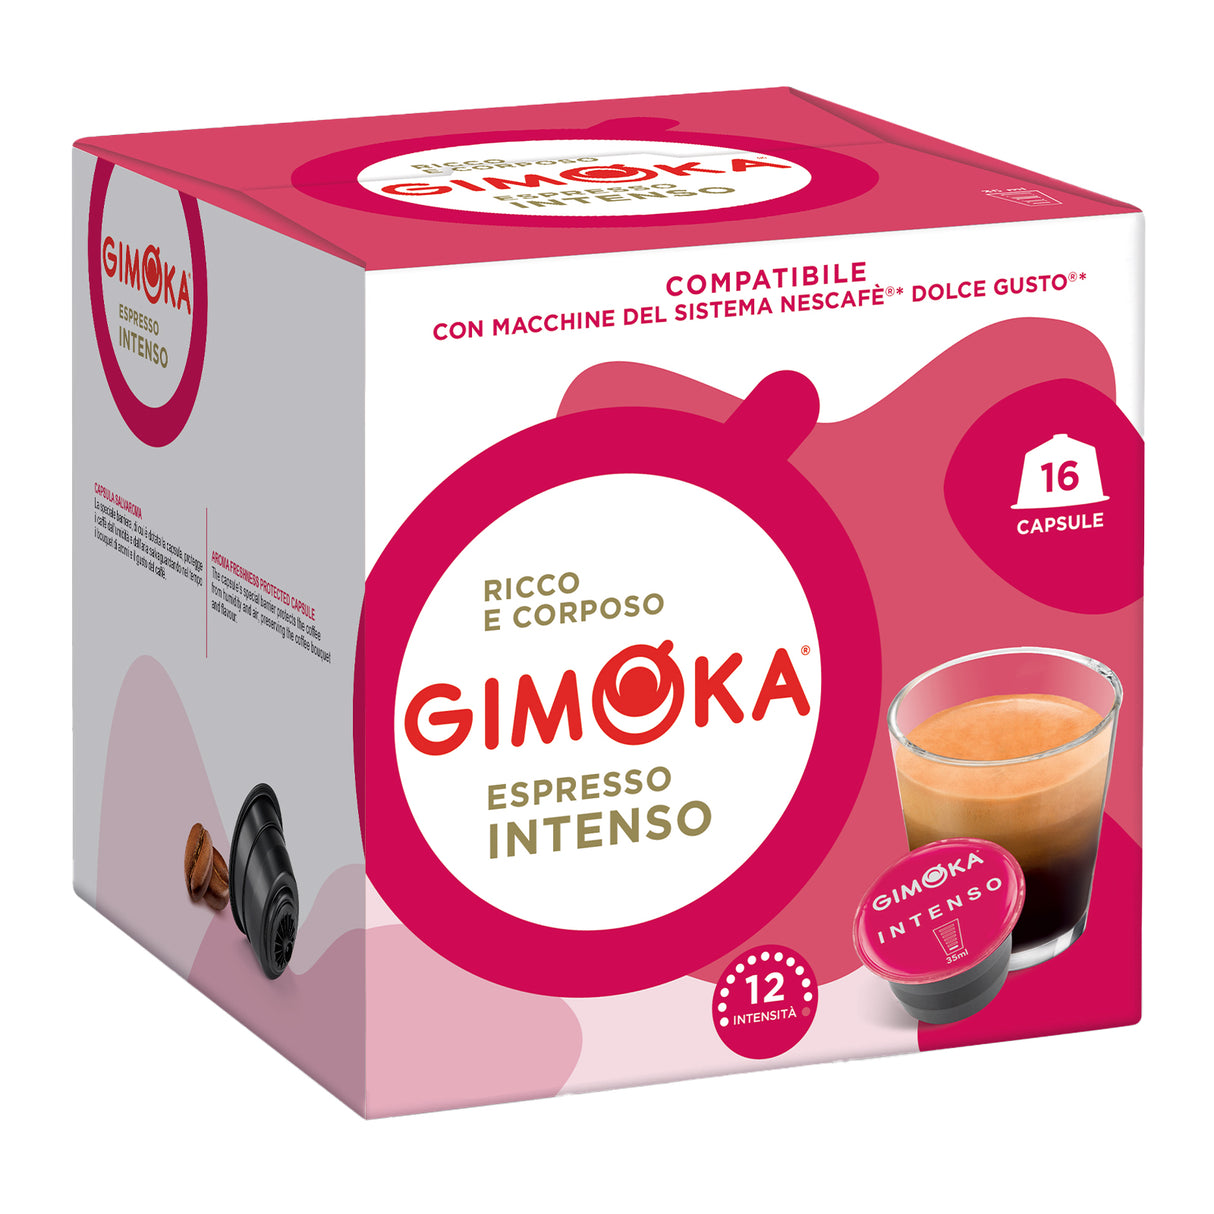 Gimoka Dolce Gusto Compatible 1 x 16 Espresso Intenso Coffee Pods